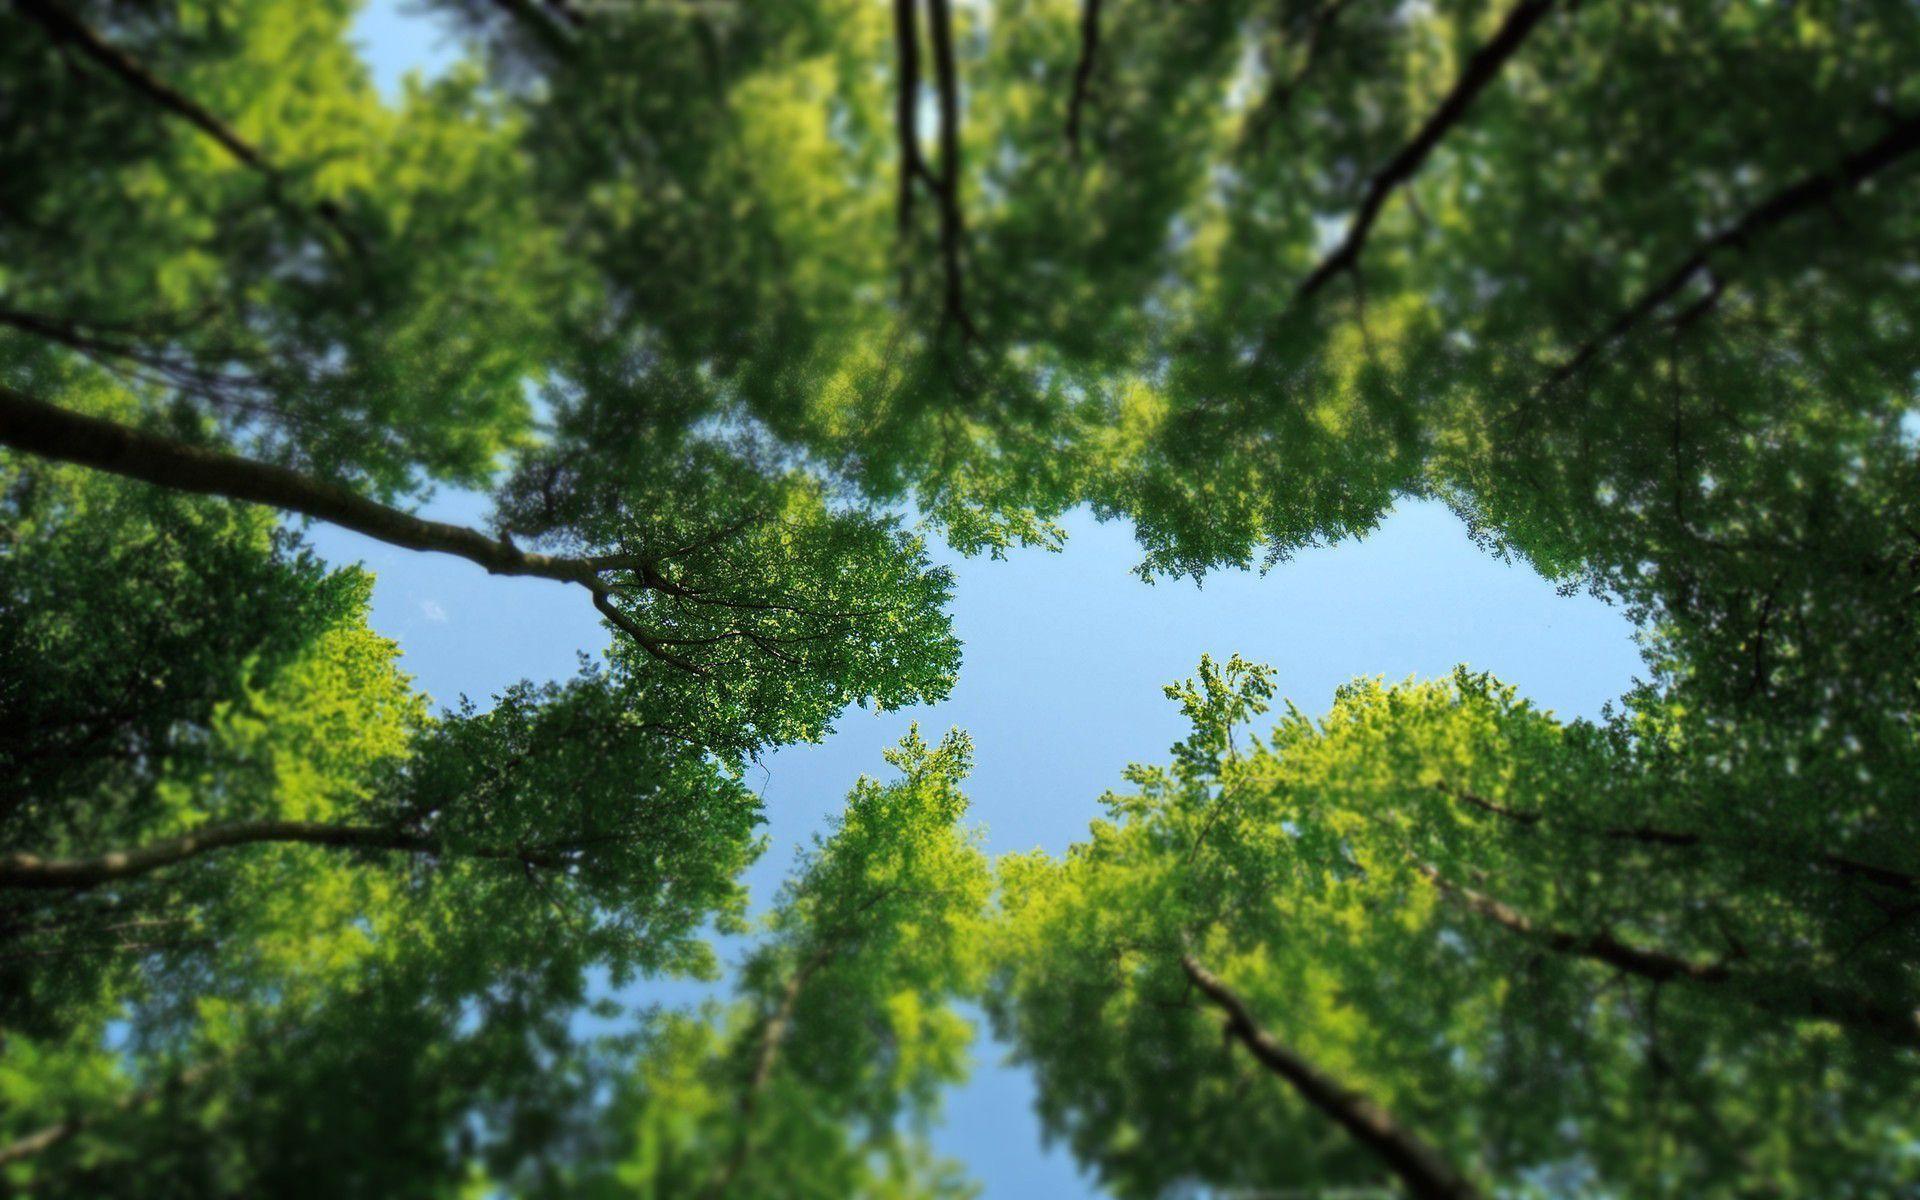 trees background